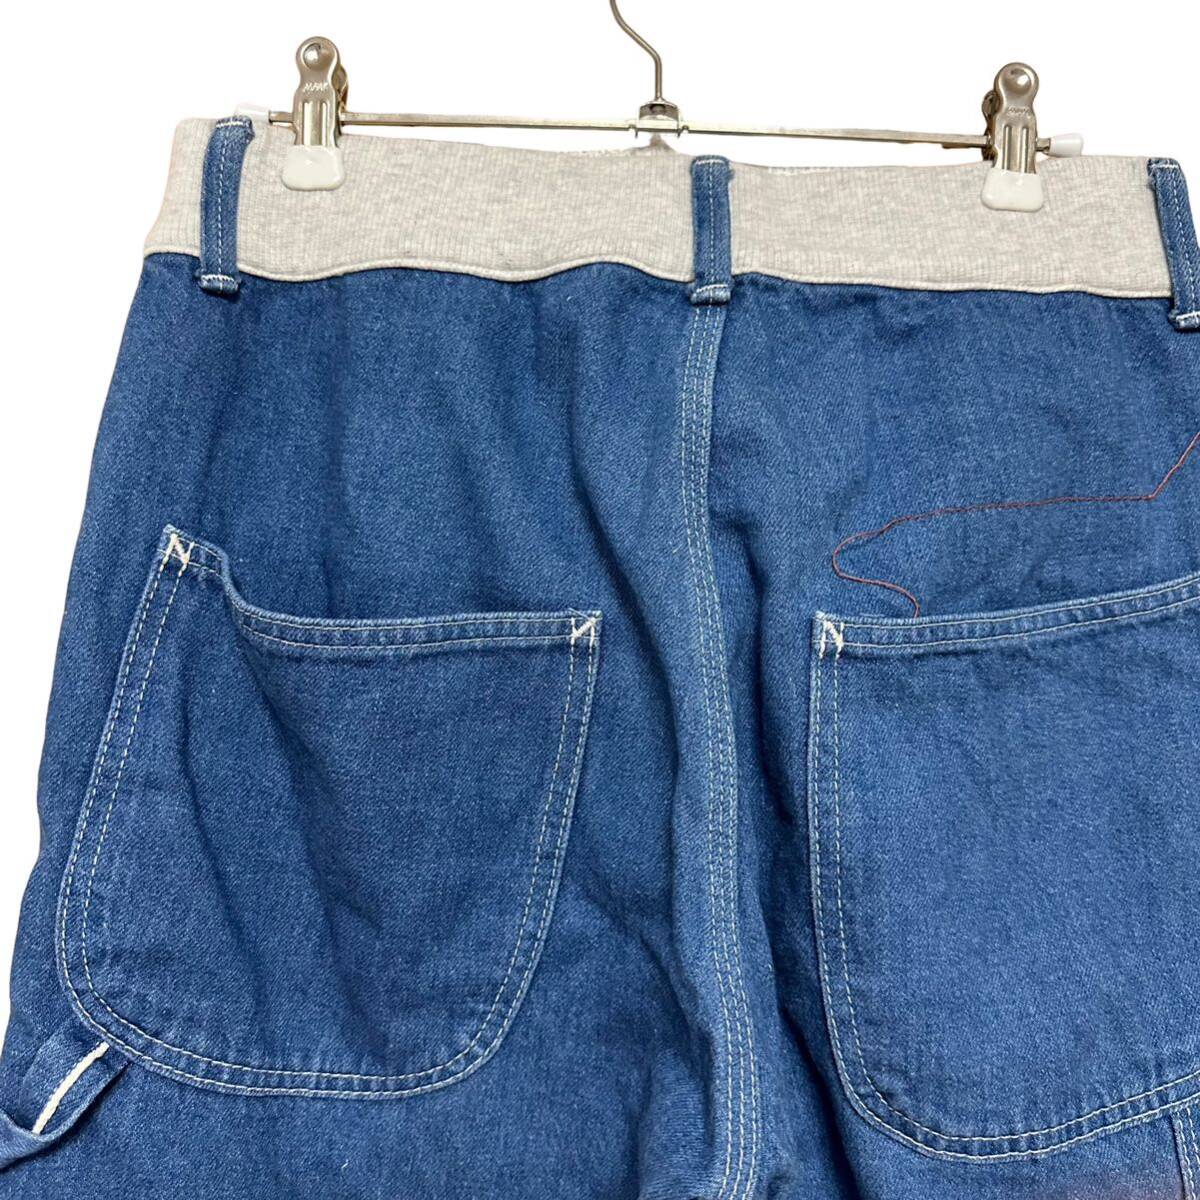 KATO Kato укороченные брюки брюки-джоггеры Denim брюки S размер индиго painter's pants 